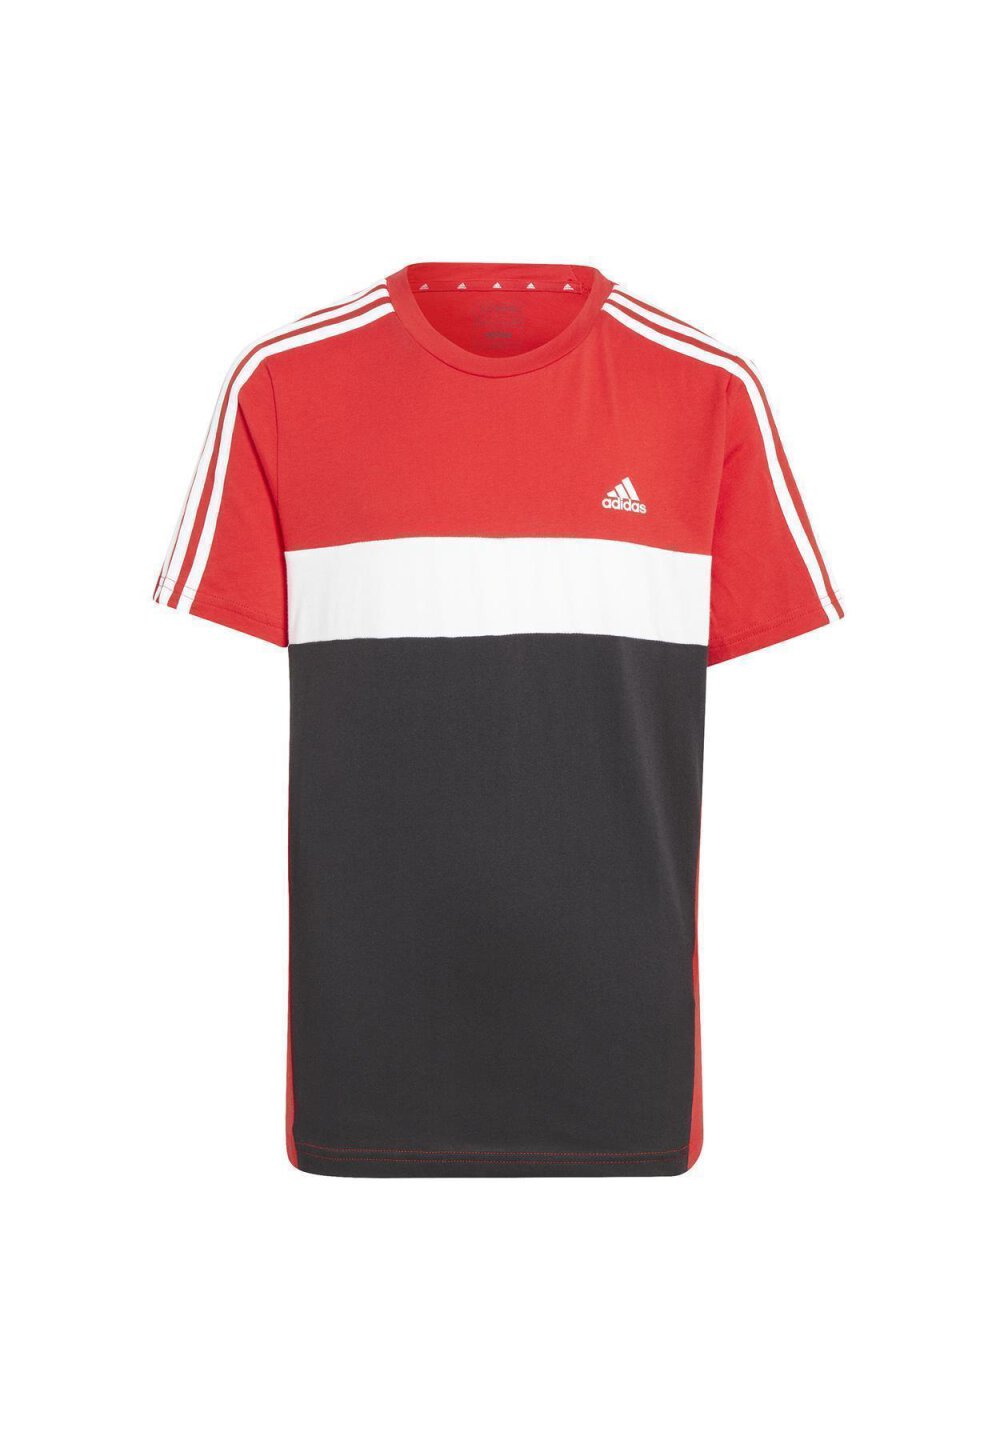 Tiberio 3-Stripes Colorblock T-Shirt Better Scarlet / Black / White 1,  24,99 €